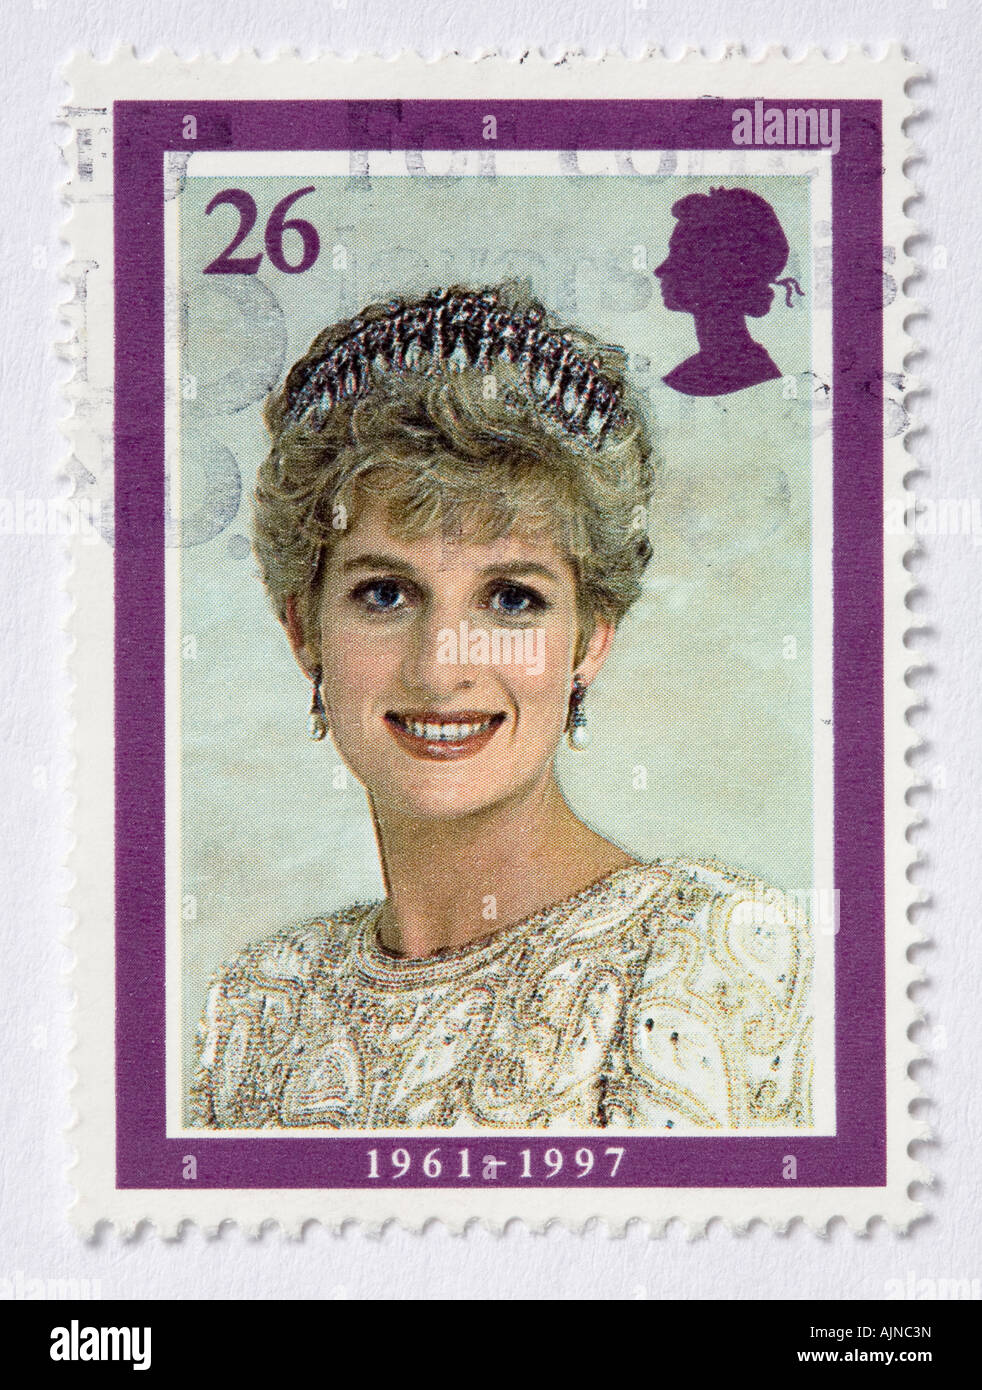 Princess diana stamp hi-res stock photography and images - Alamy